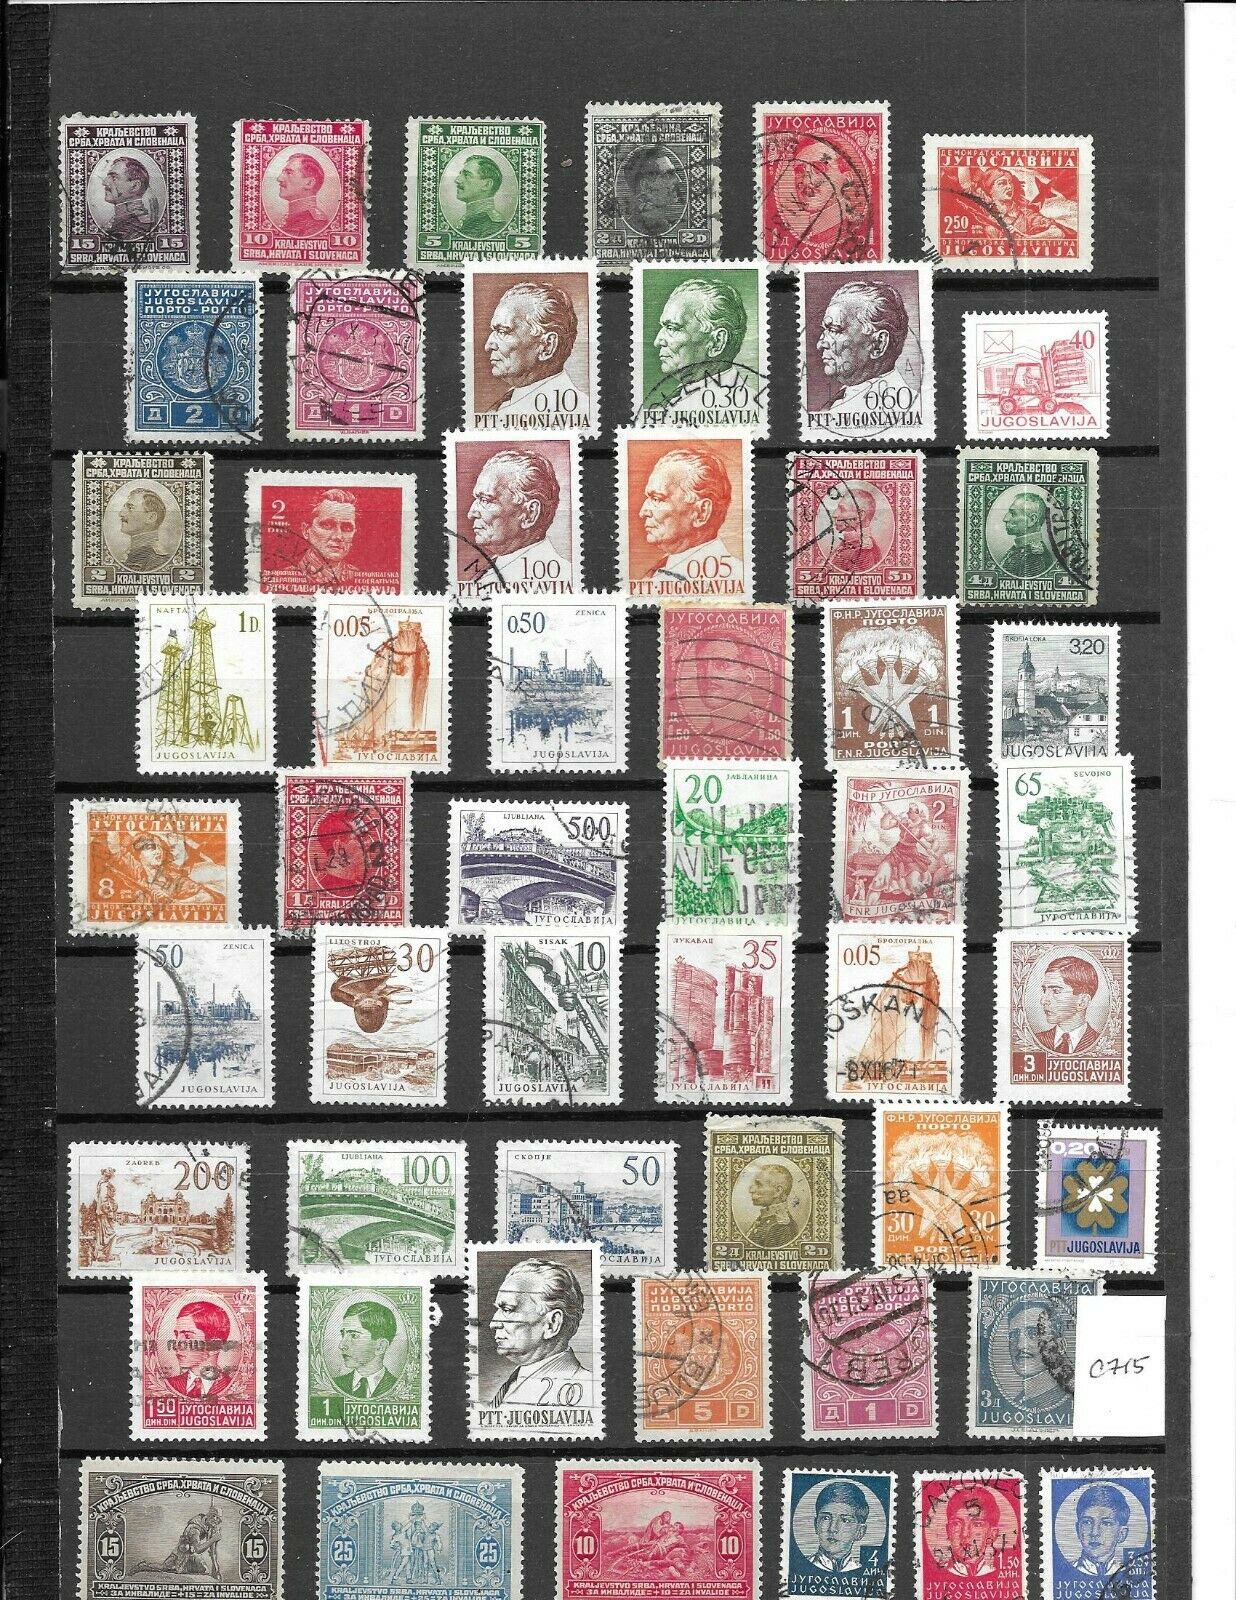 Jugoslavia Stamps (c715)